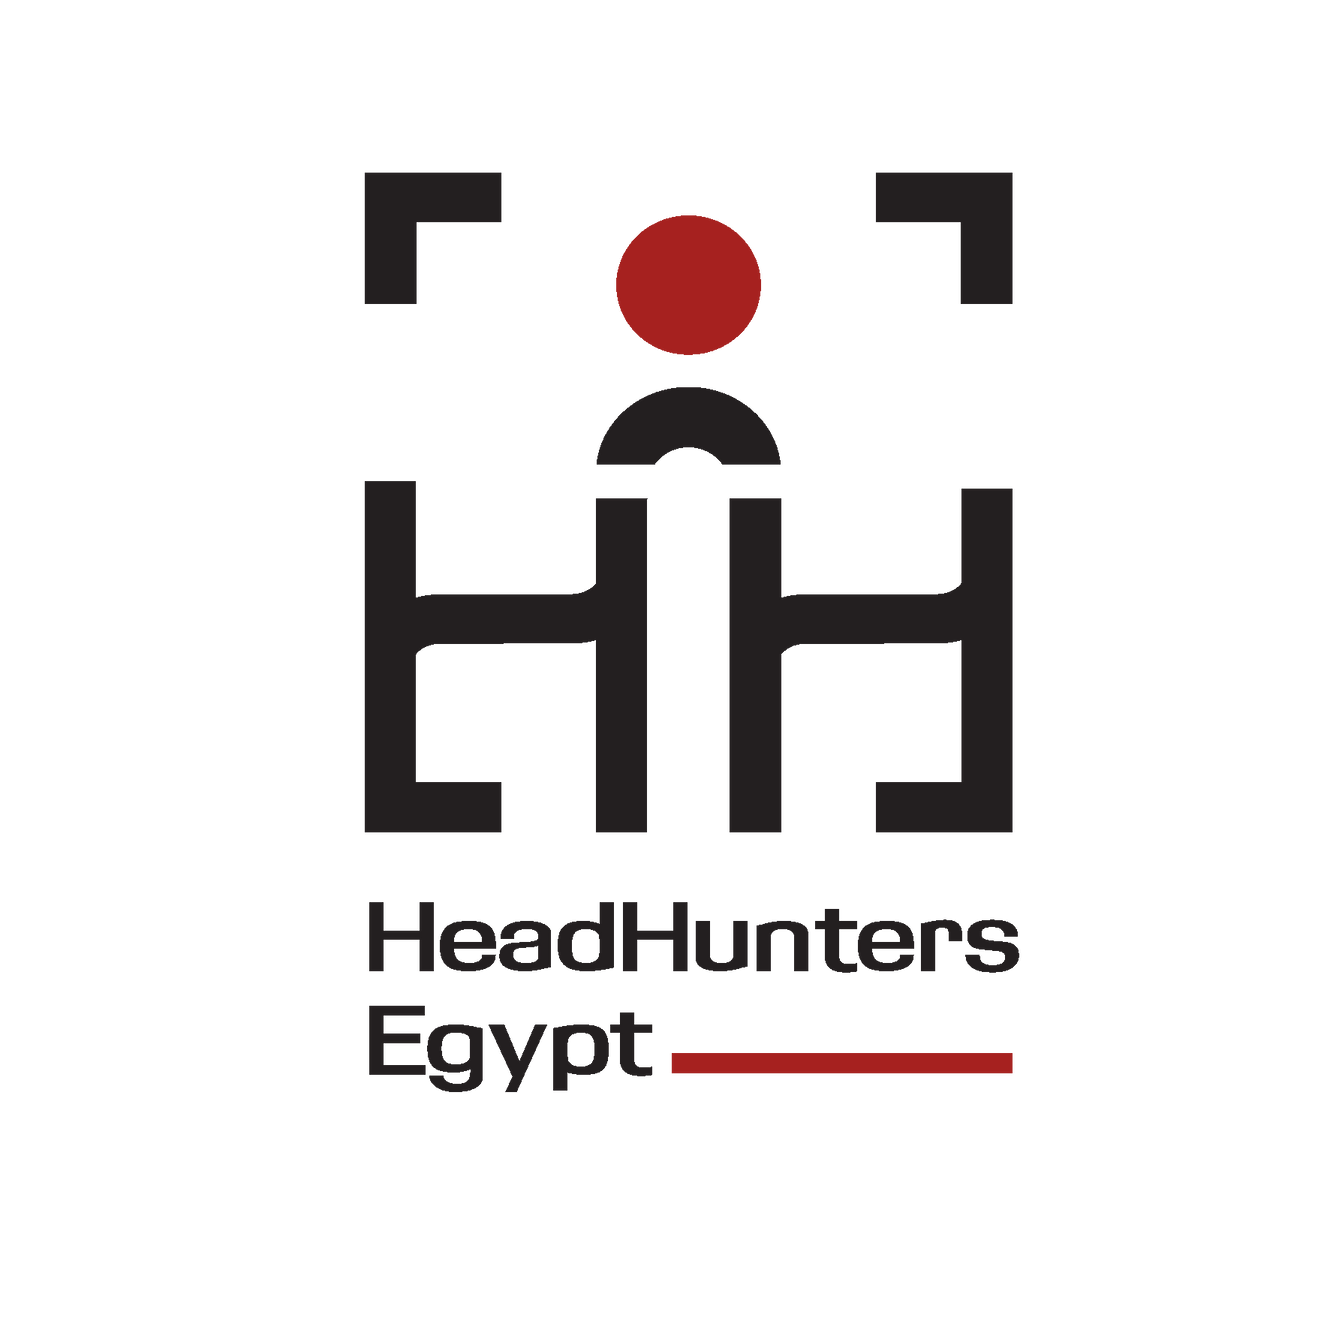 Head Hunters Egypt